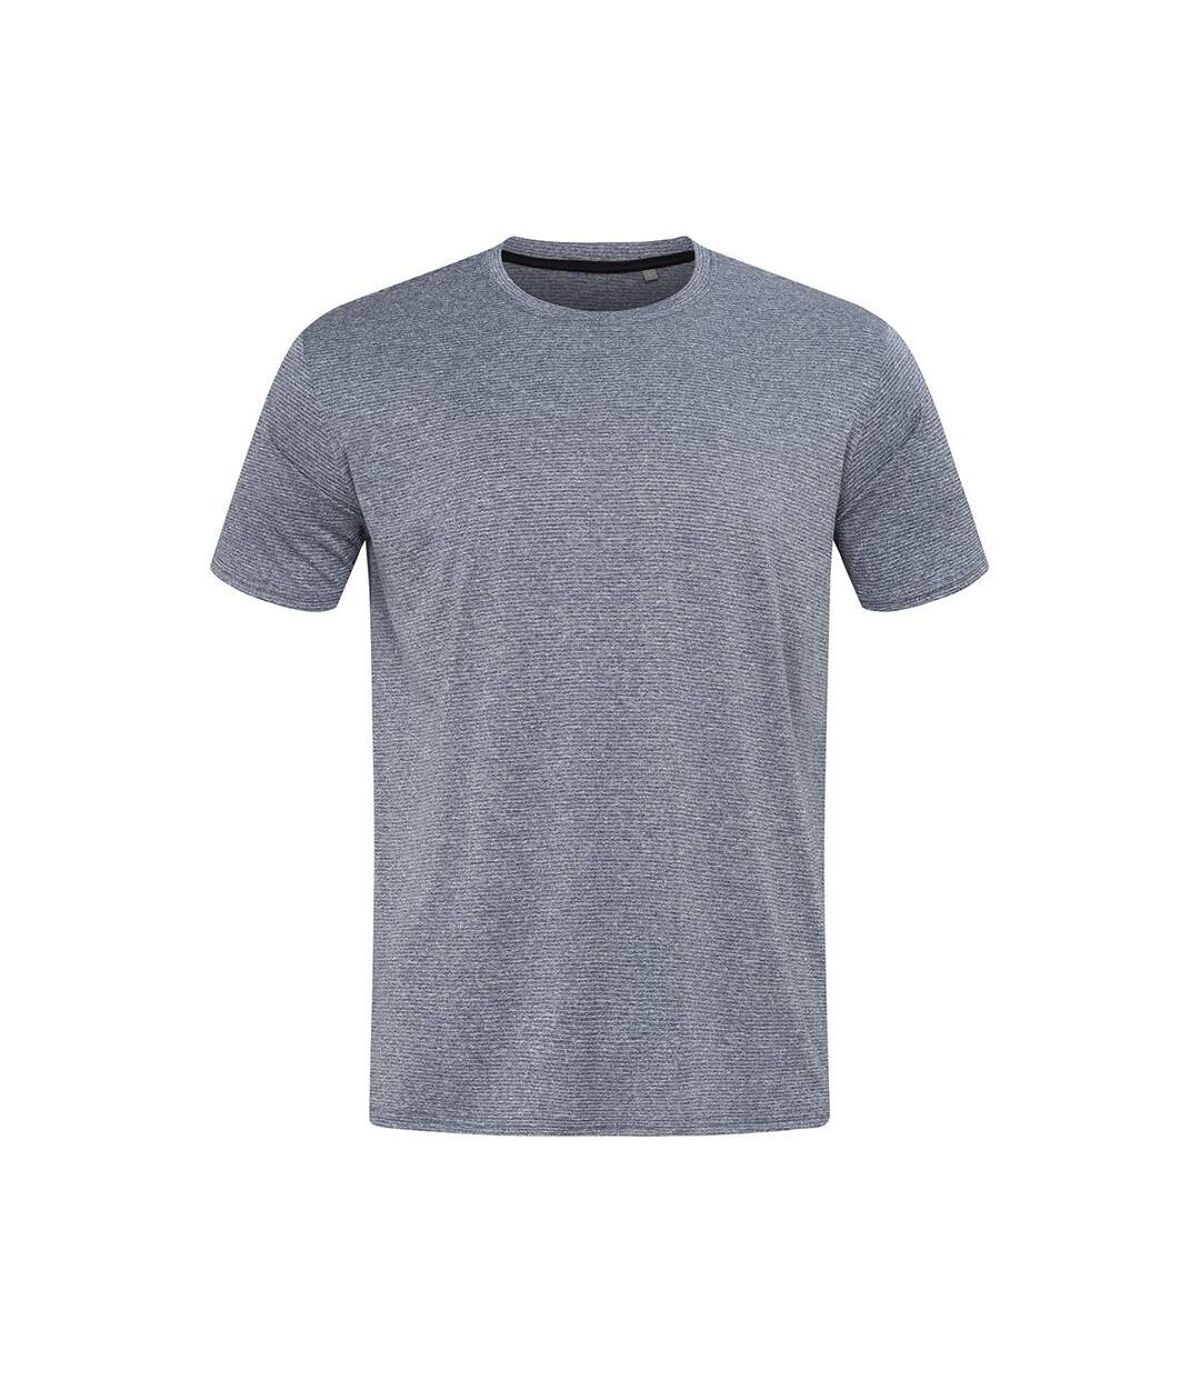 Stedman - T-shirt MOVE - Homme (Denim Chiné) - UTAB516